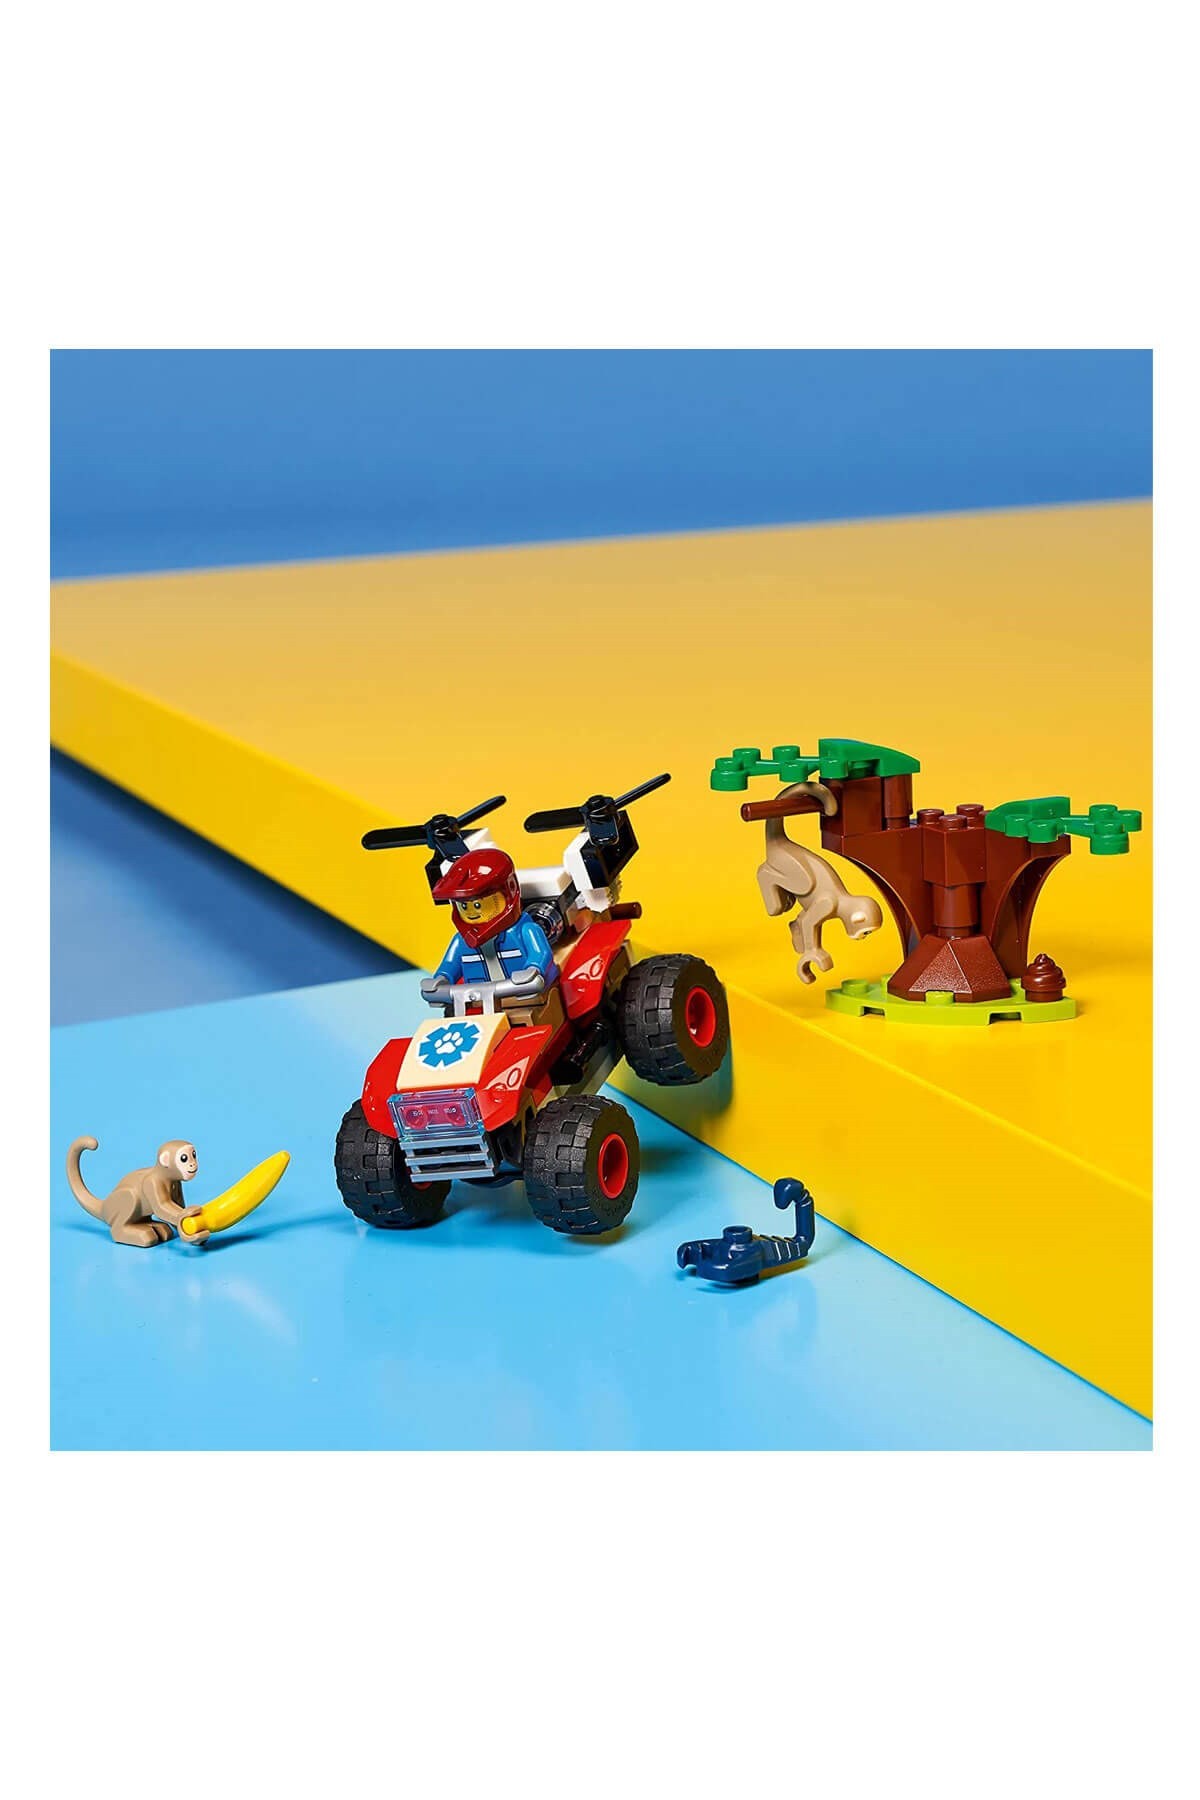 Lego City Wildlife Rescue ATV 60300